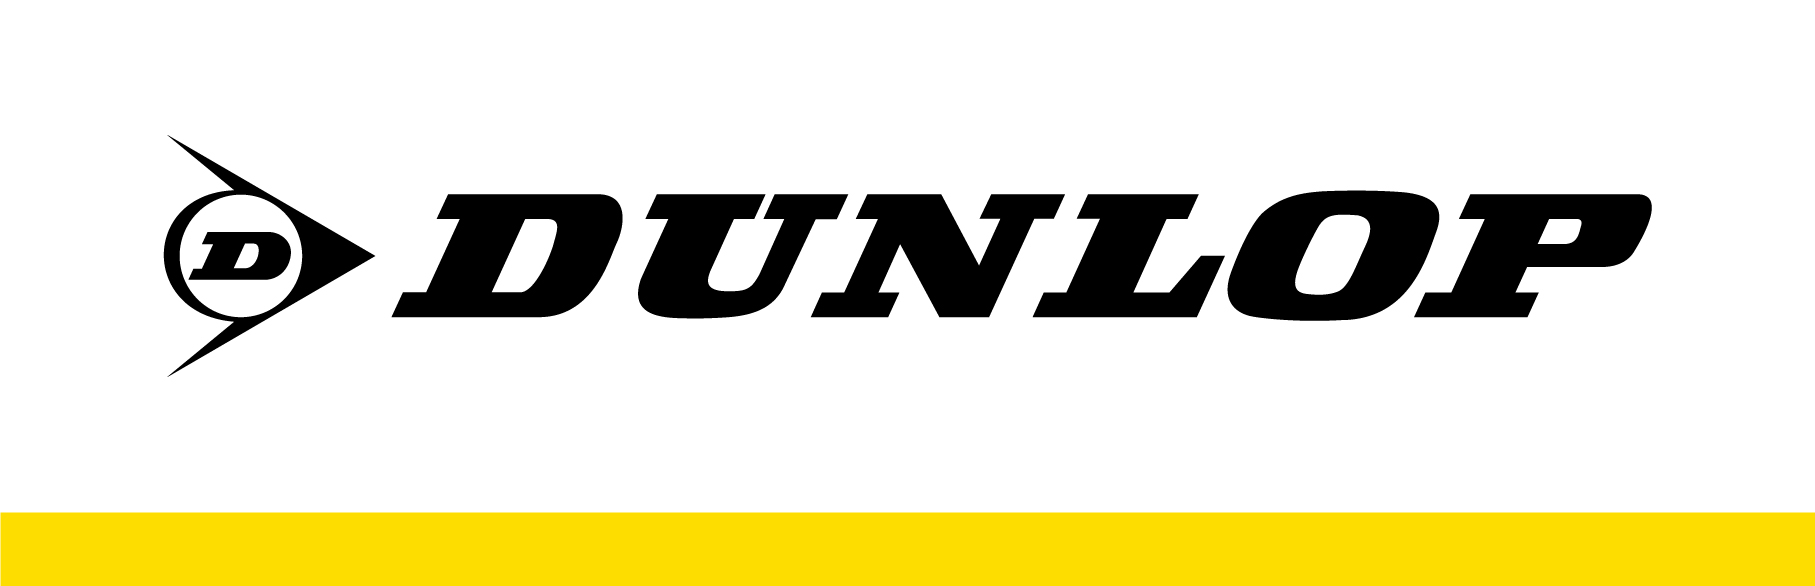 Dunlop Automotive logo